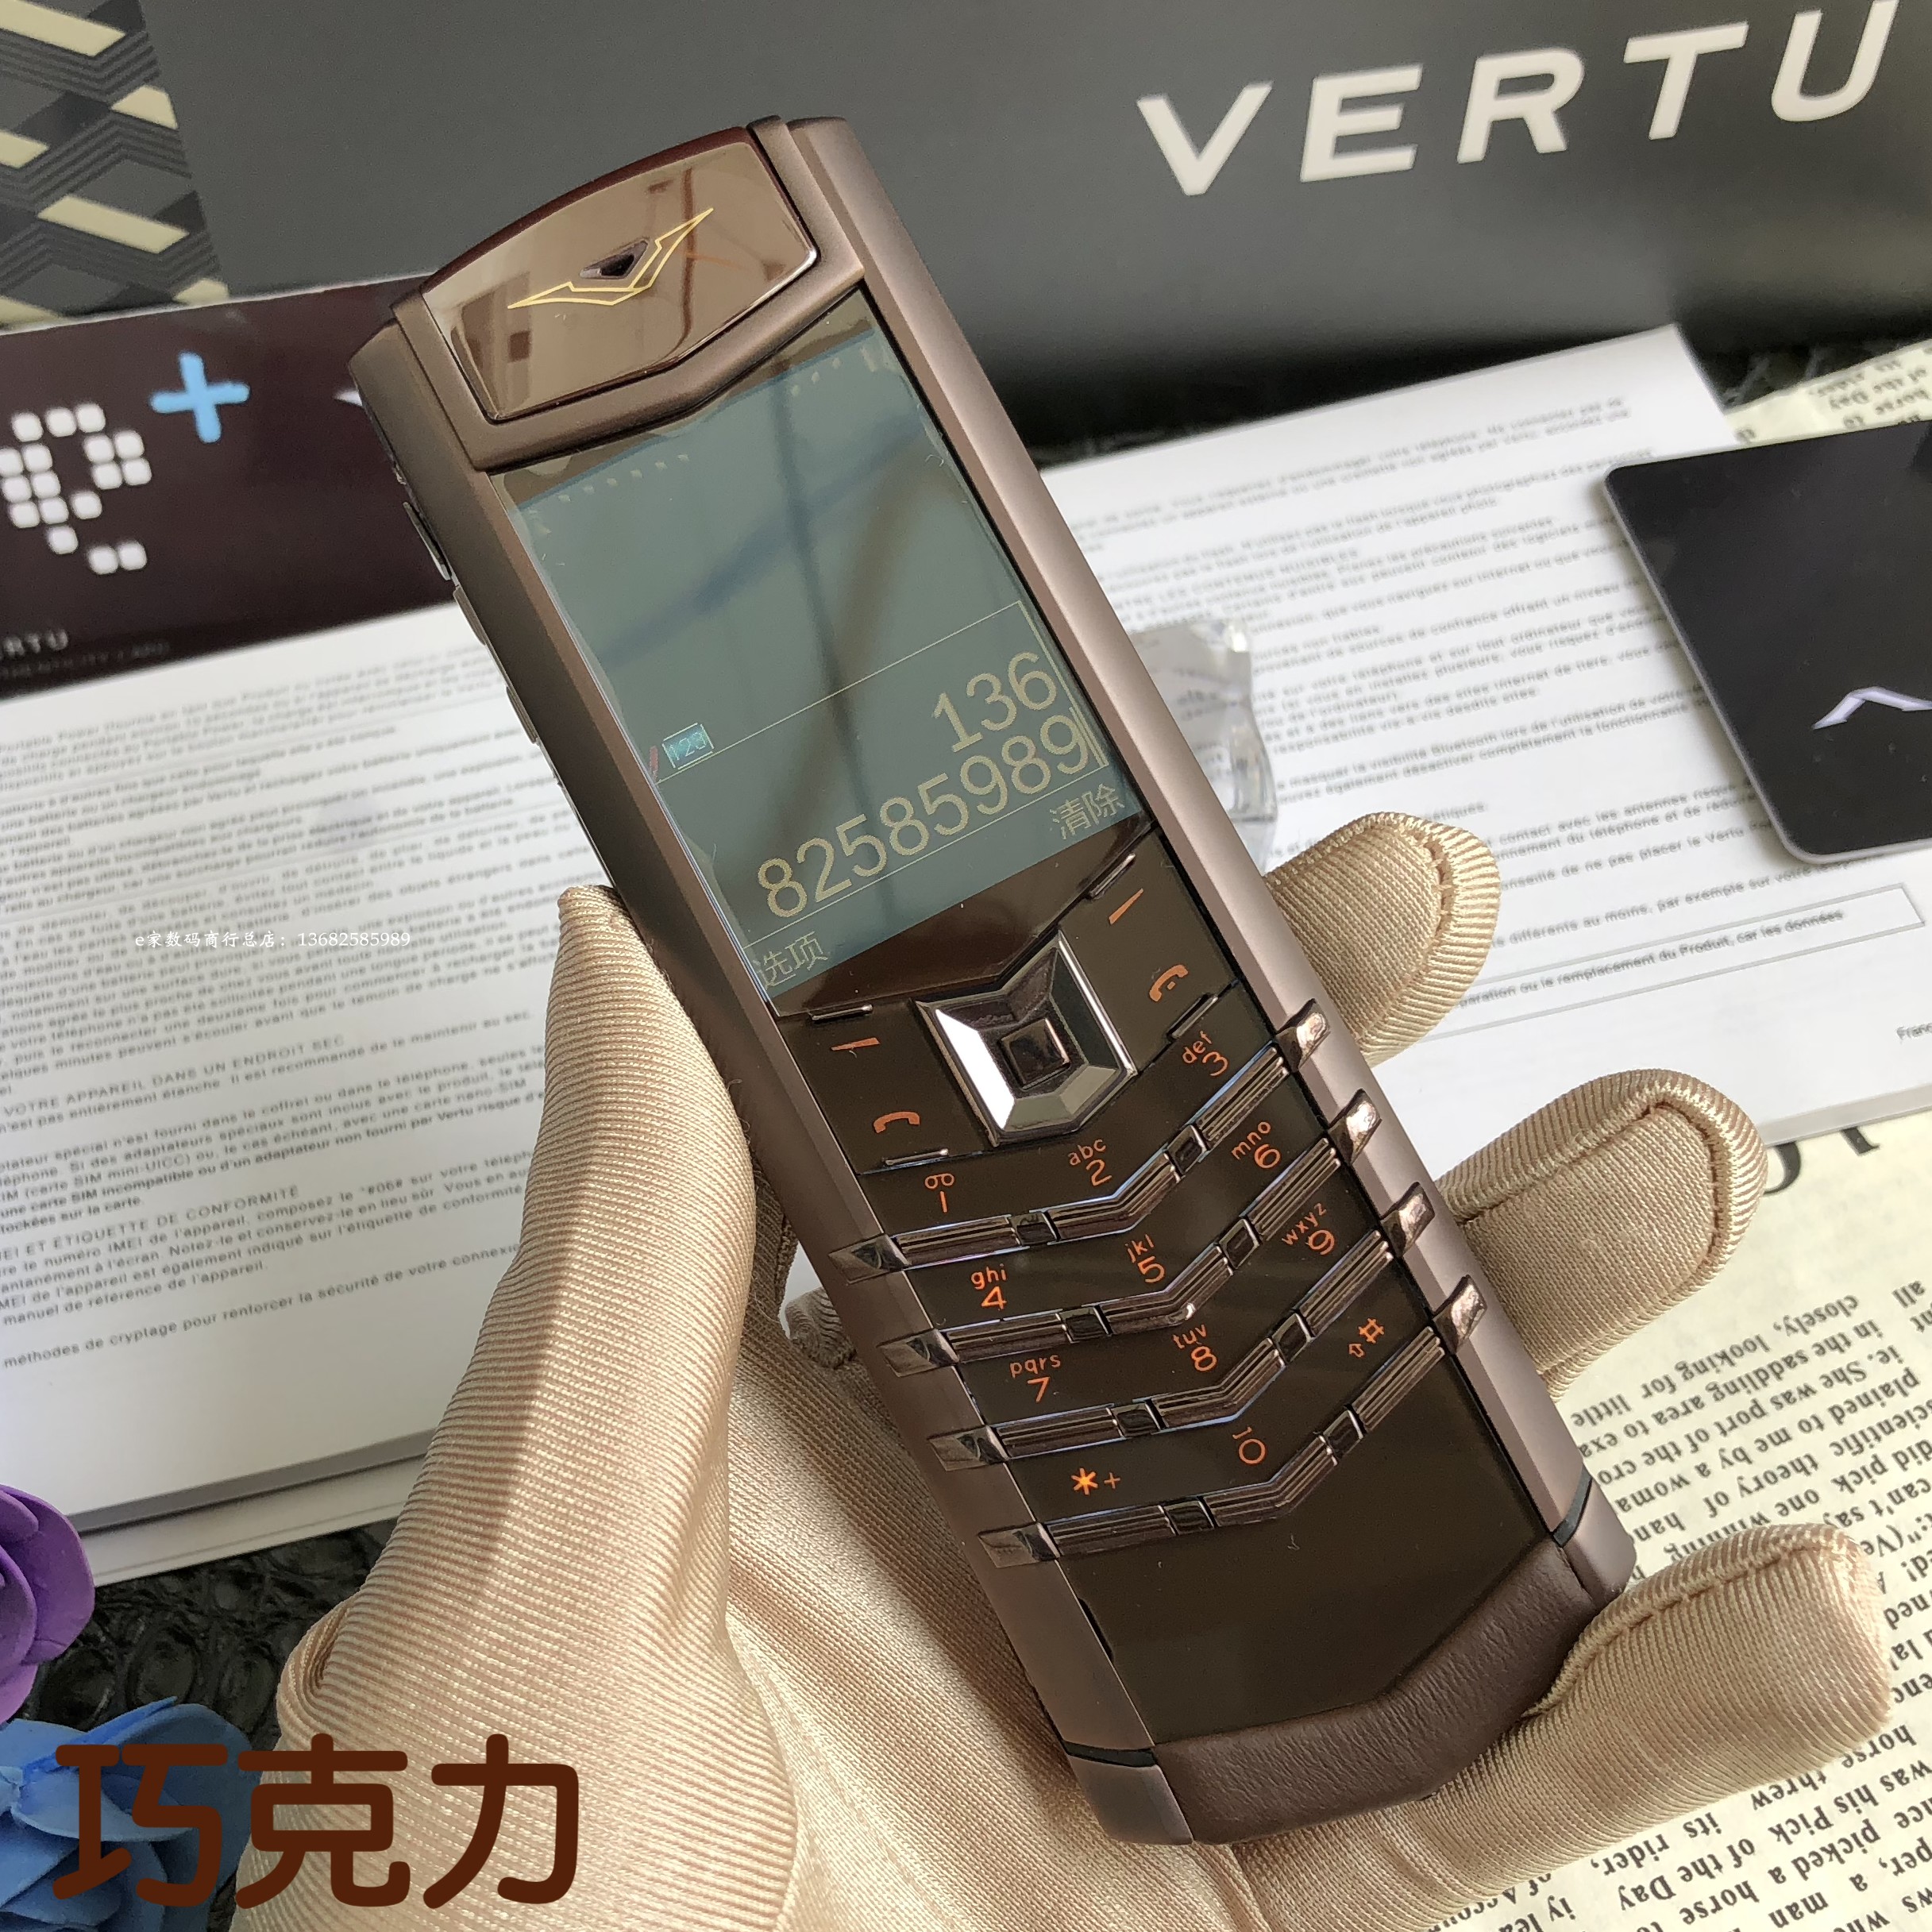 vertu signature威图总裁签名版巧克力小牛皮手机全